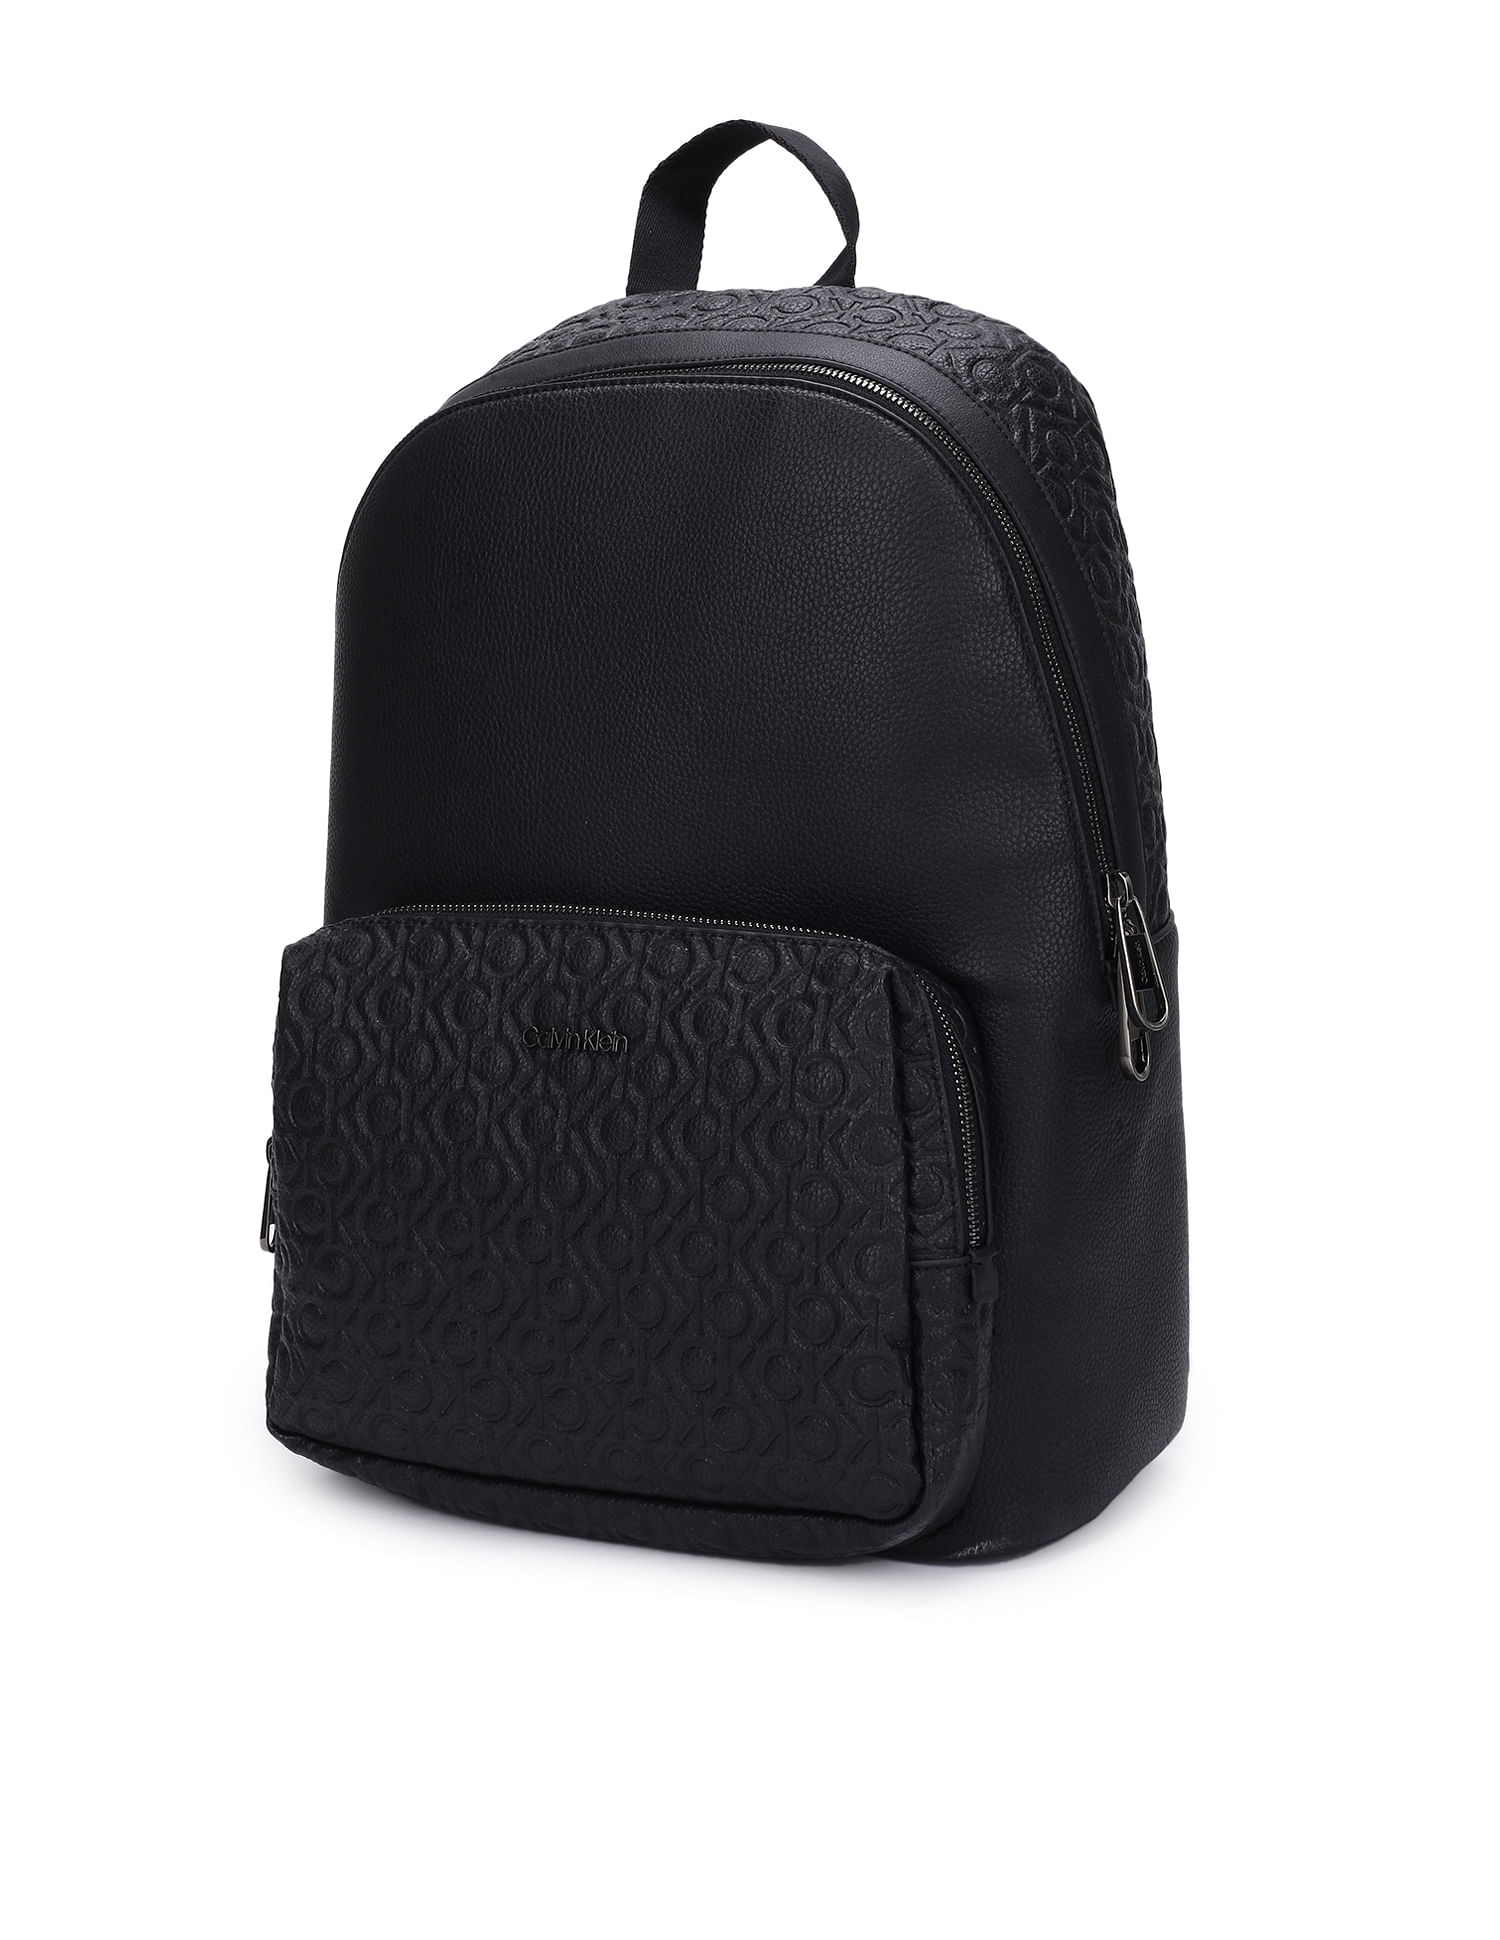 Calvin Klein Women's Backpack. 8720107787889 #181